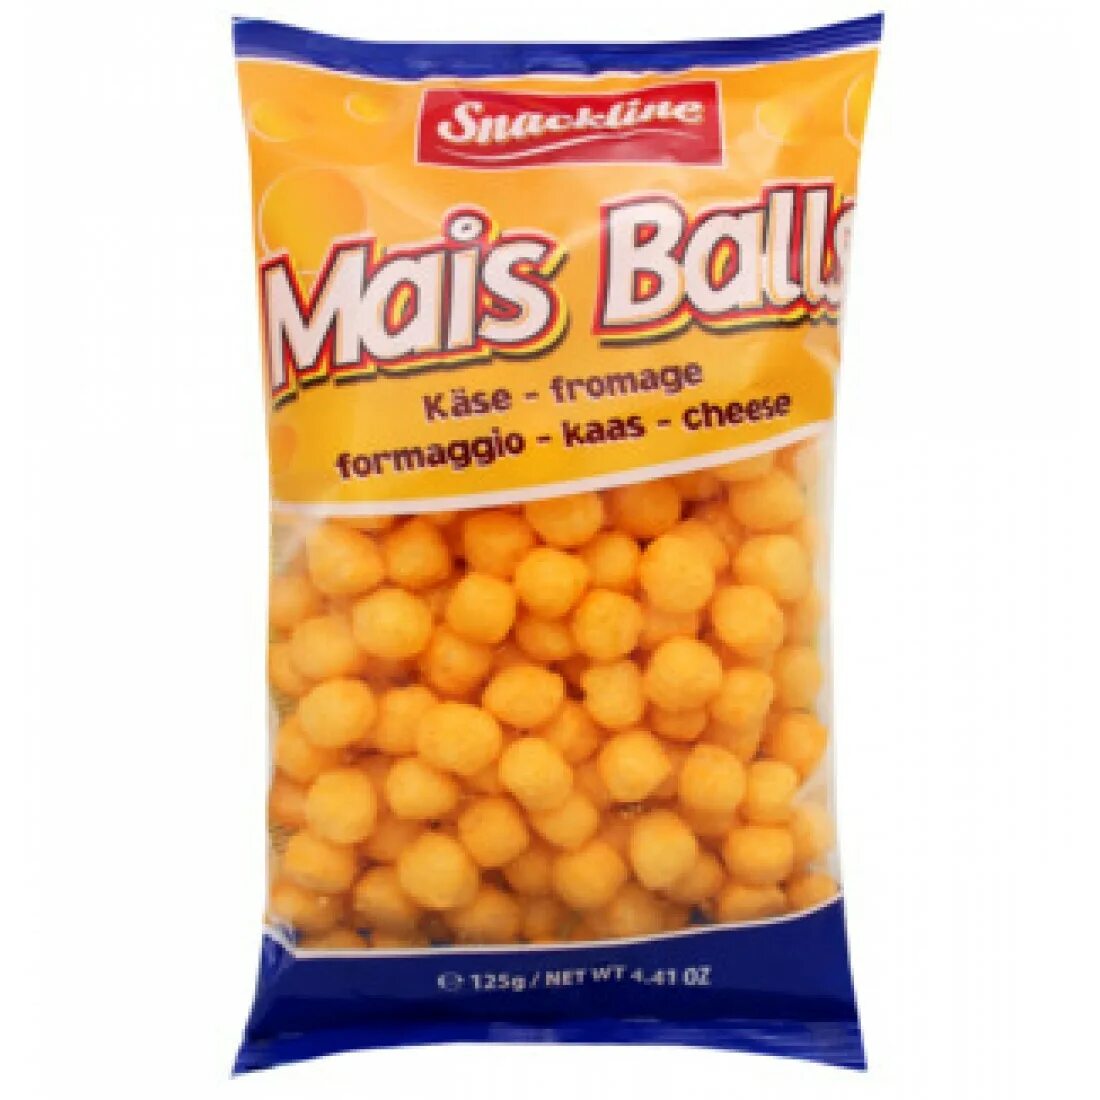 Шарики сыр ball. Кукурузные снэки Chees Ball. Сыр Ball кукурузные шарики. Сырные шарики Корн бол. Сырные шарики чипсы.